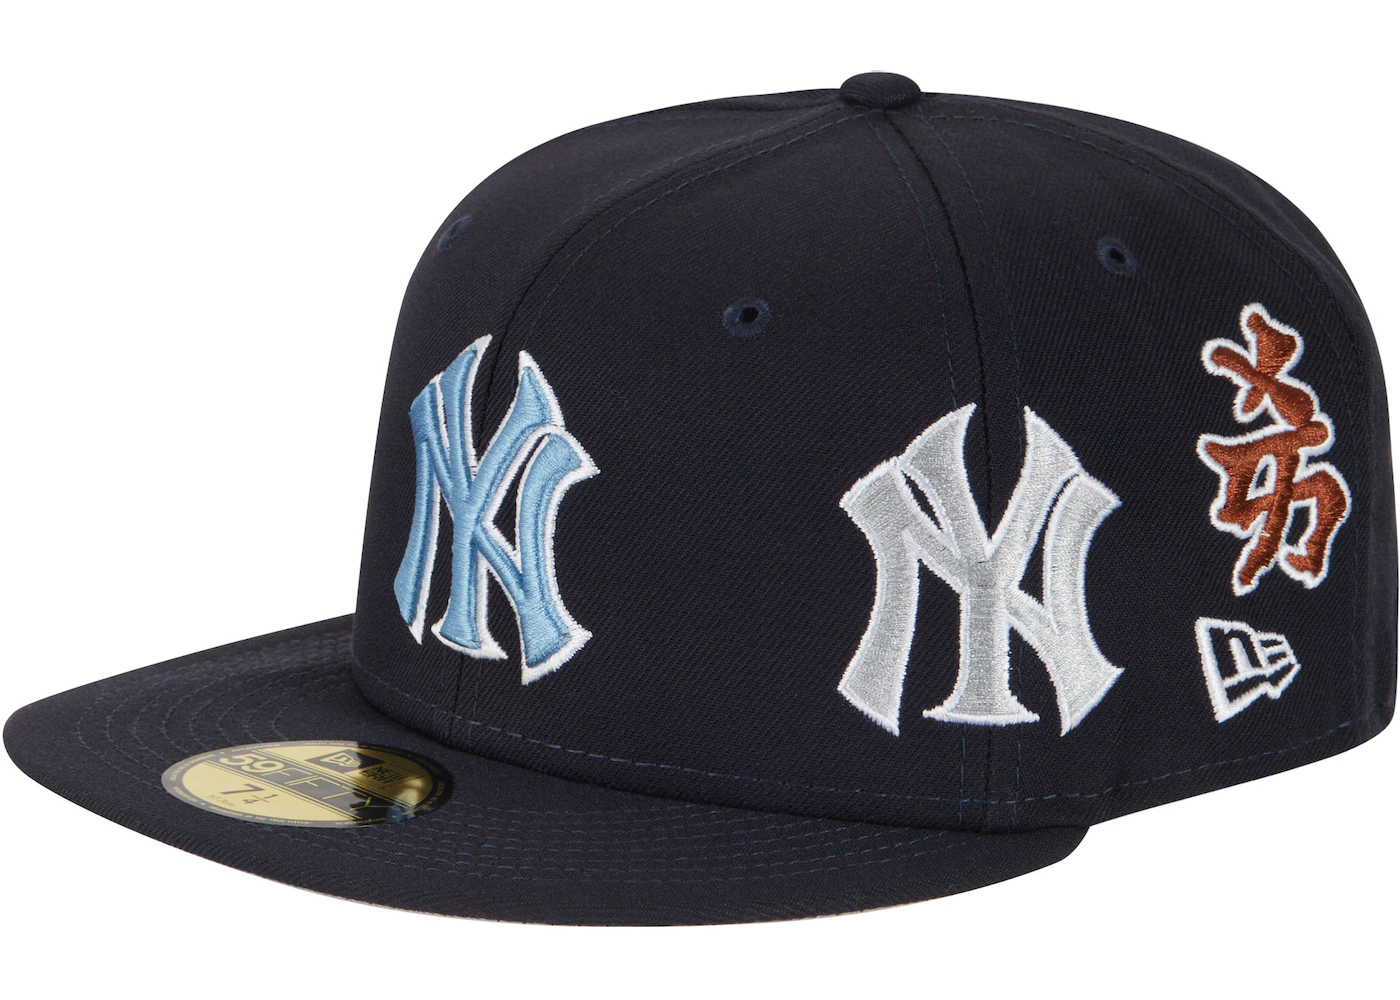 new york yankees hat grey